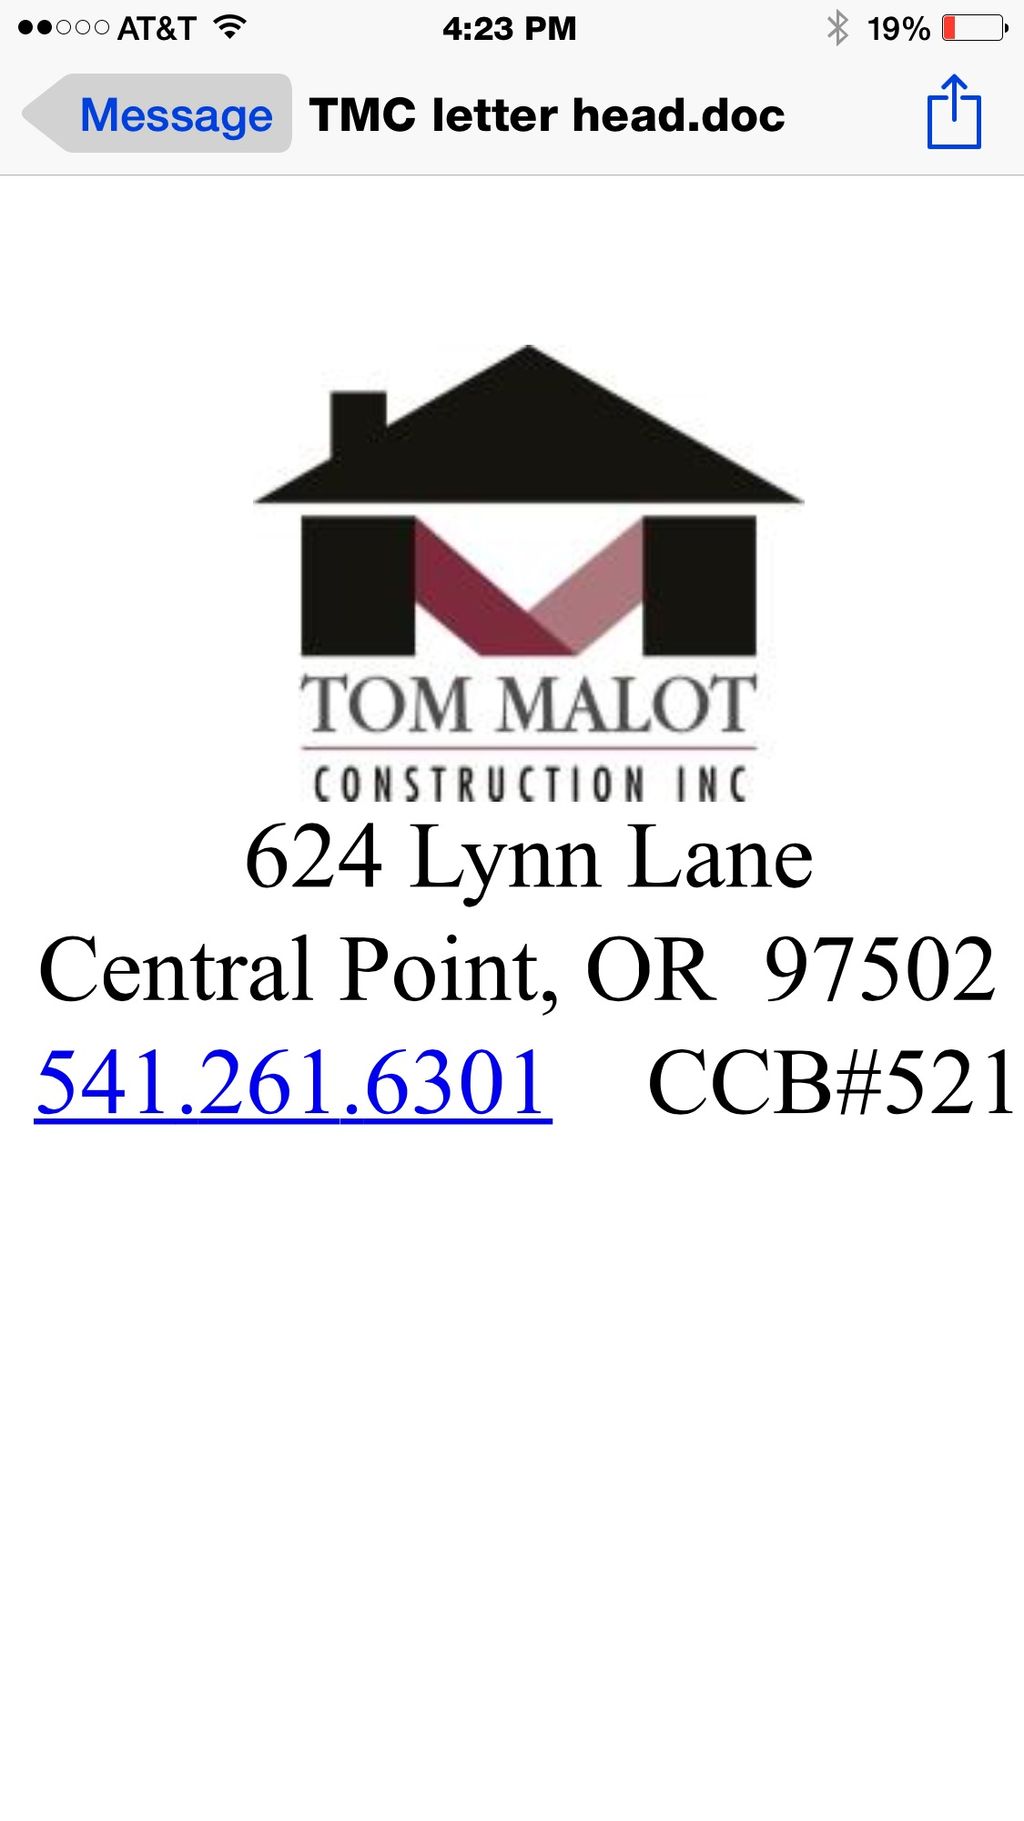 Tom Malot Construction Company Inc.